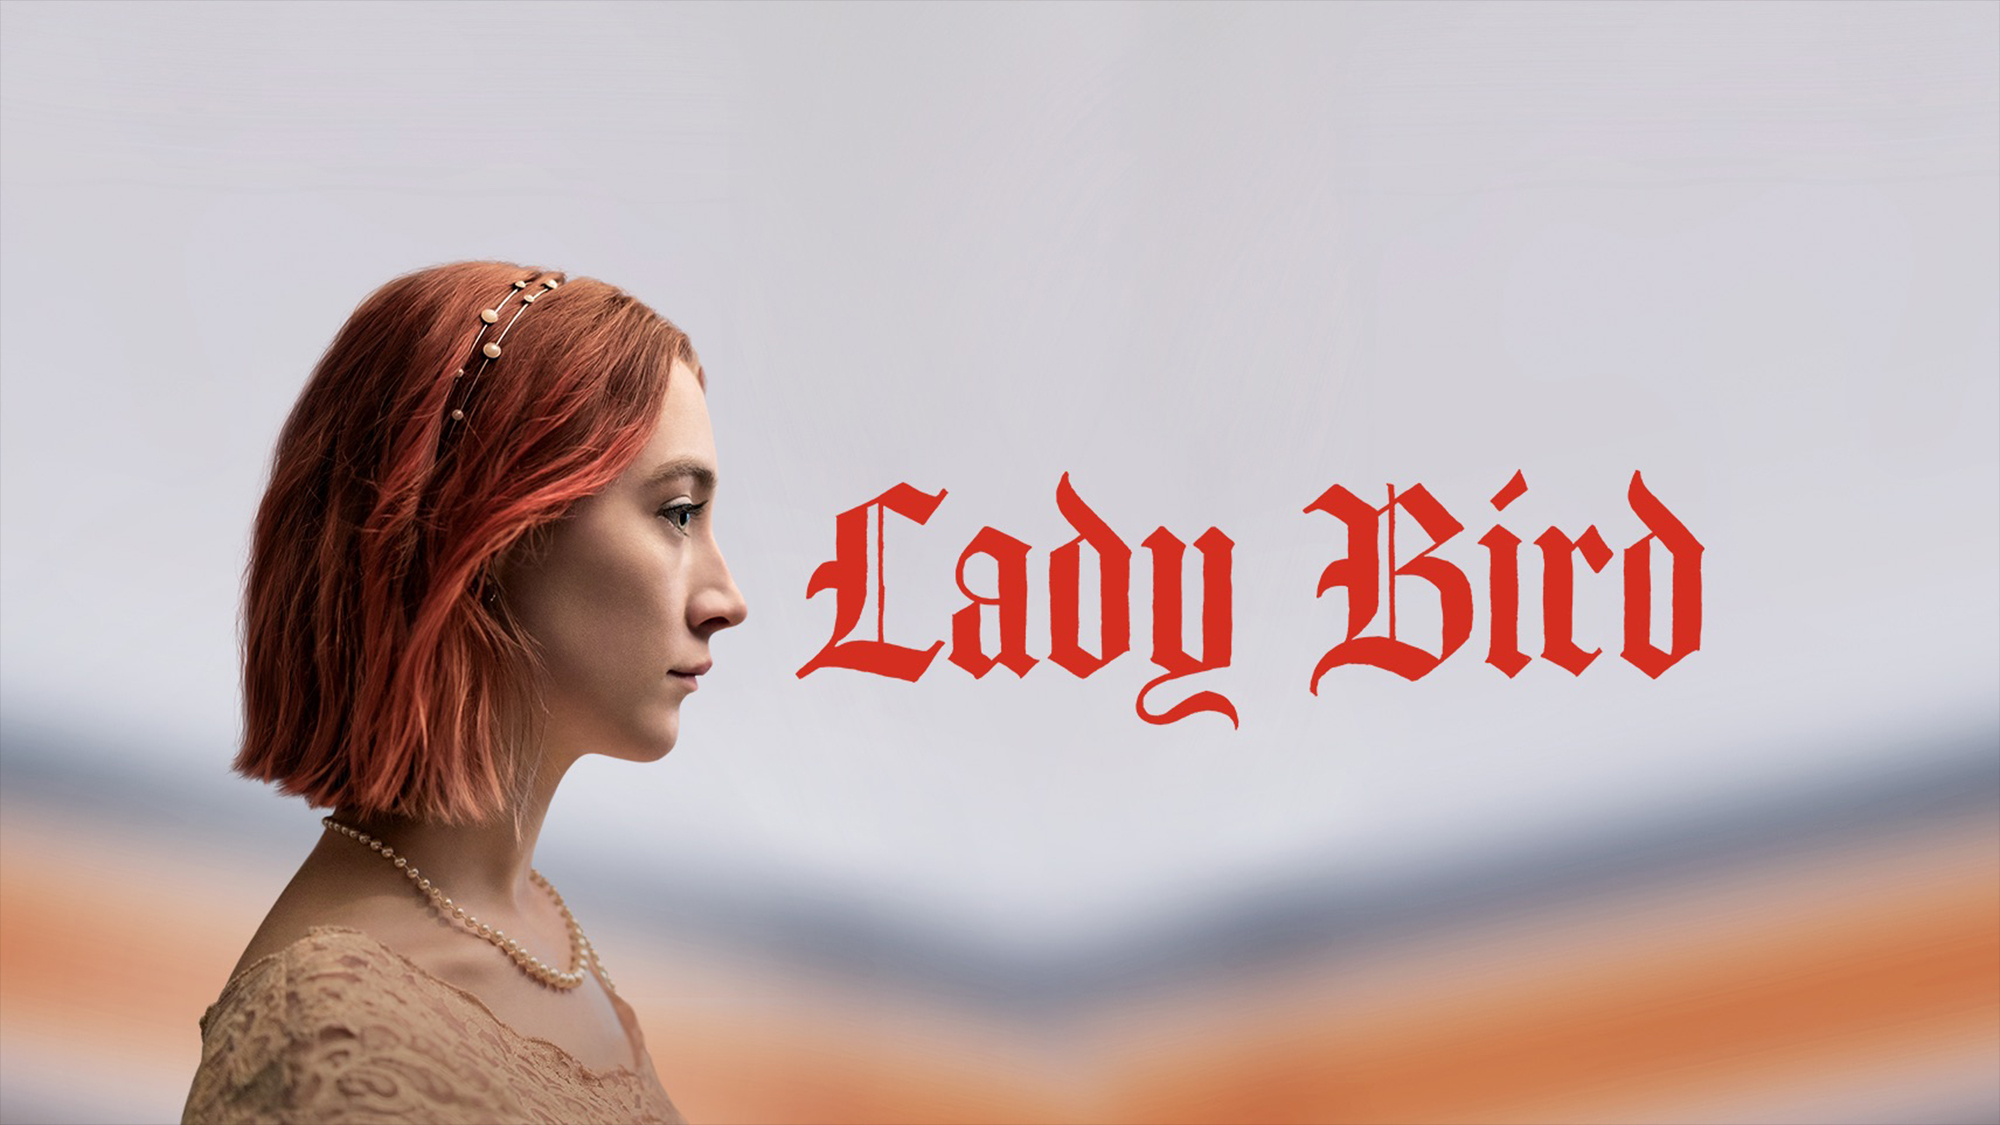 Movie Lady Bird HD Wallpaper | Background Image